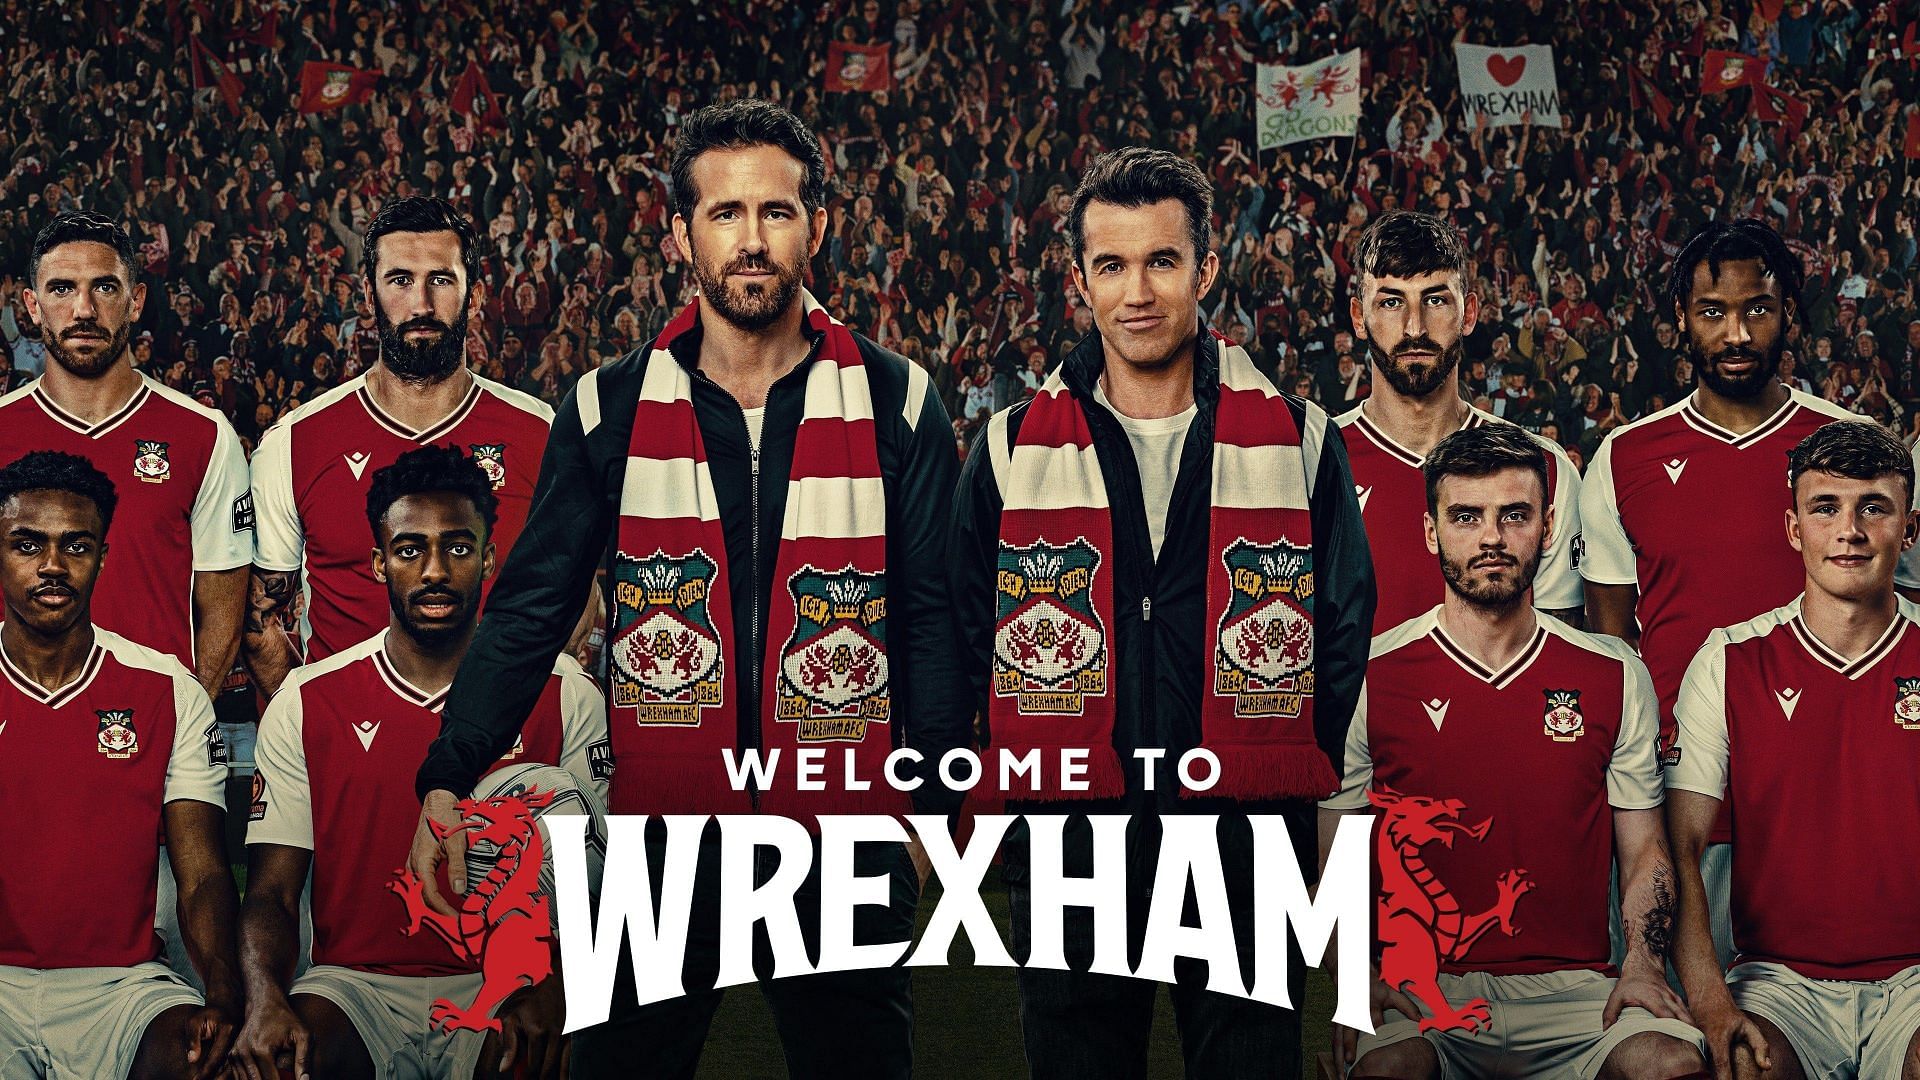 Welcome to Wrexham (Image via FX)